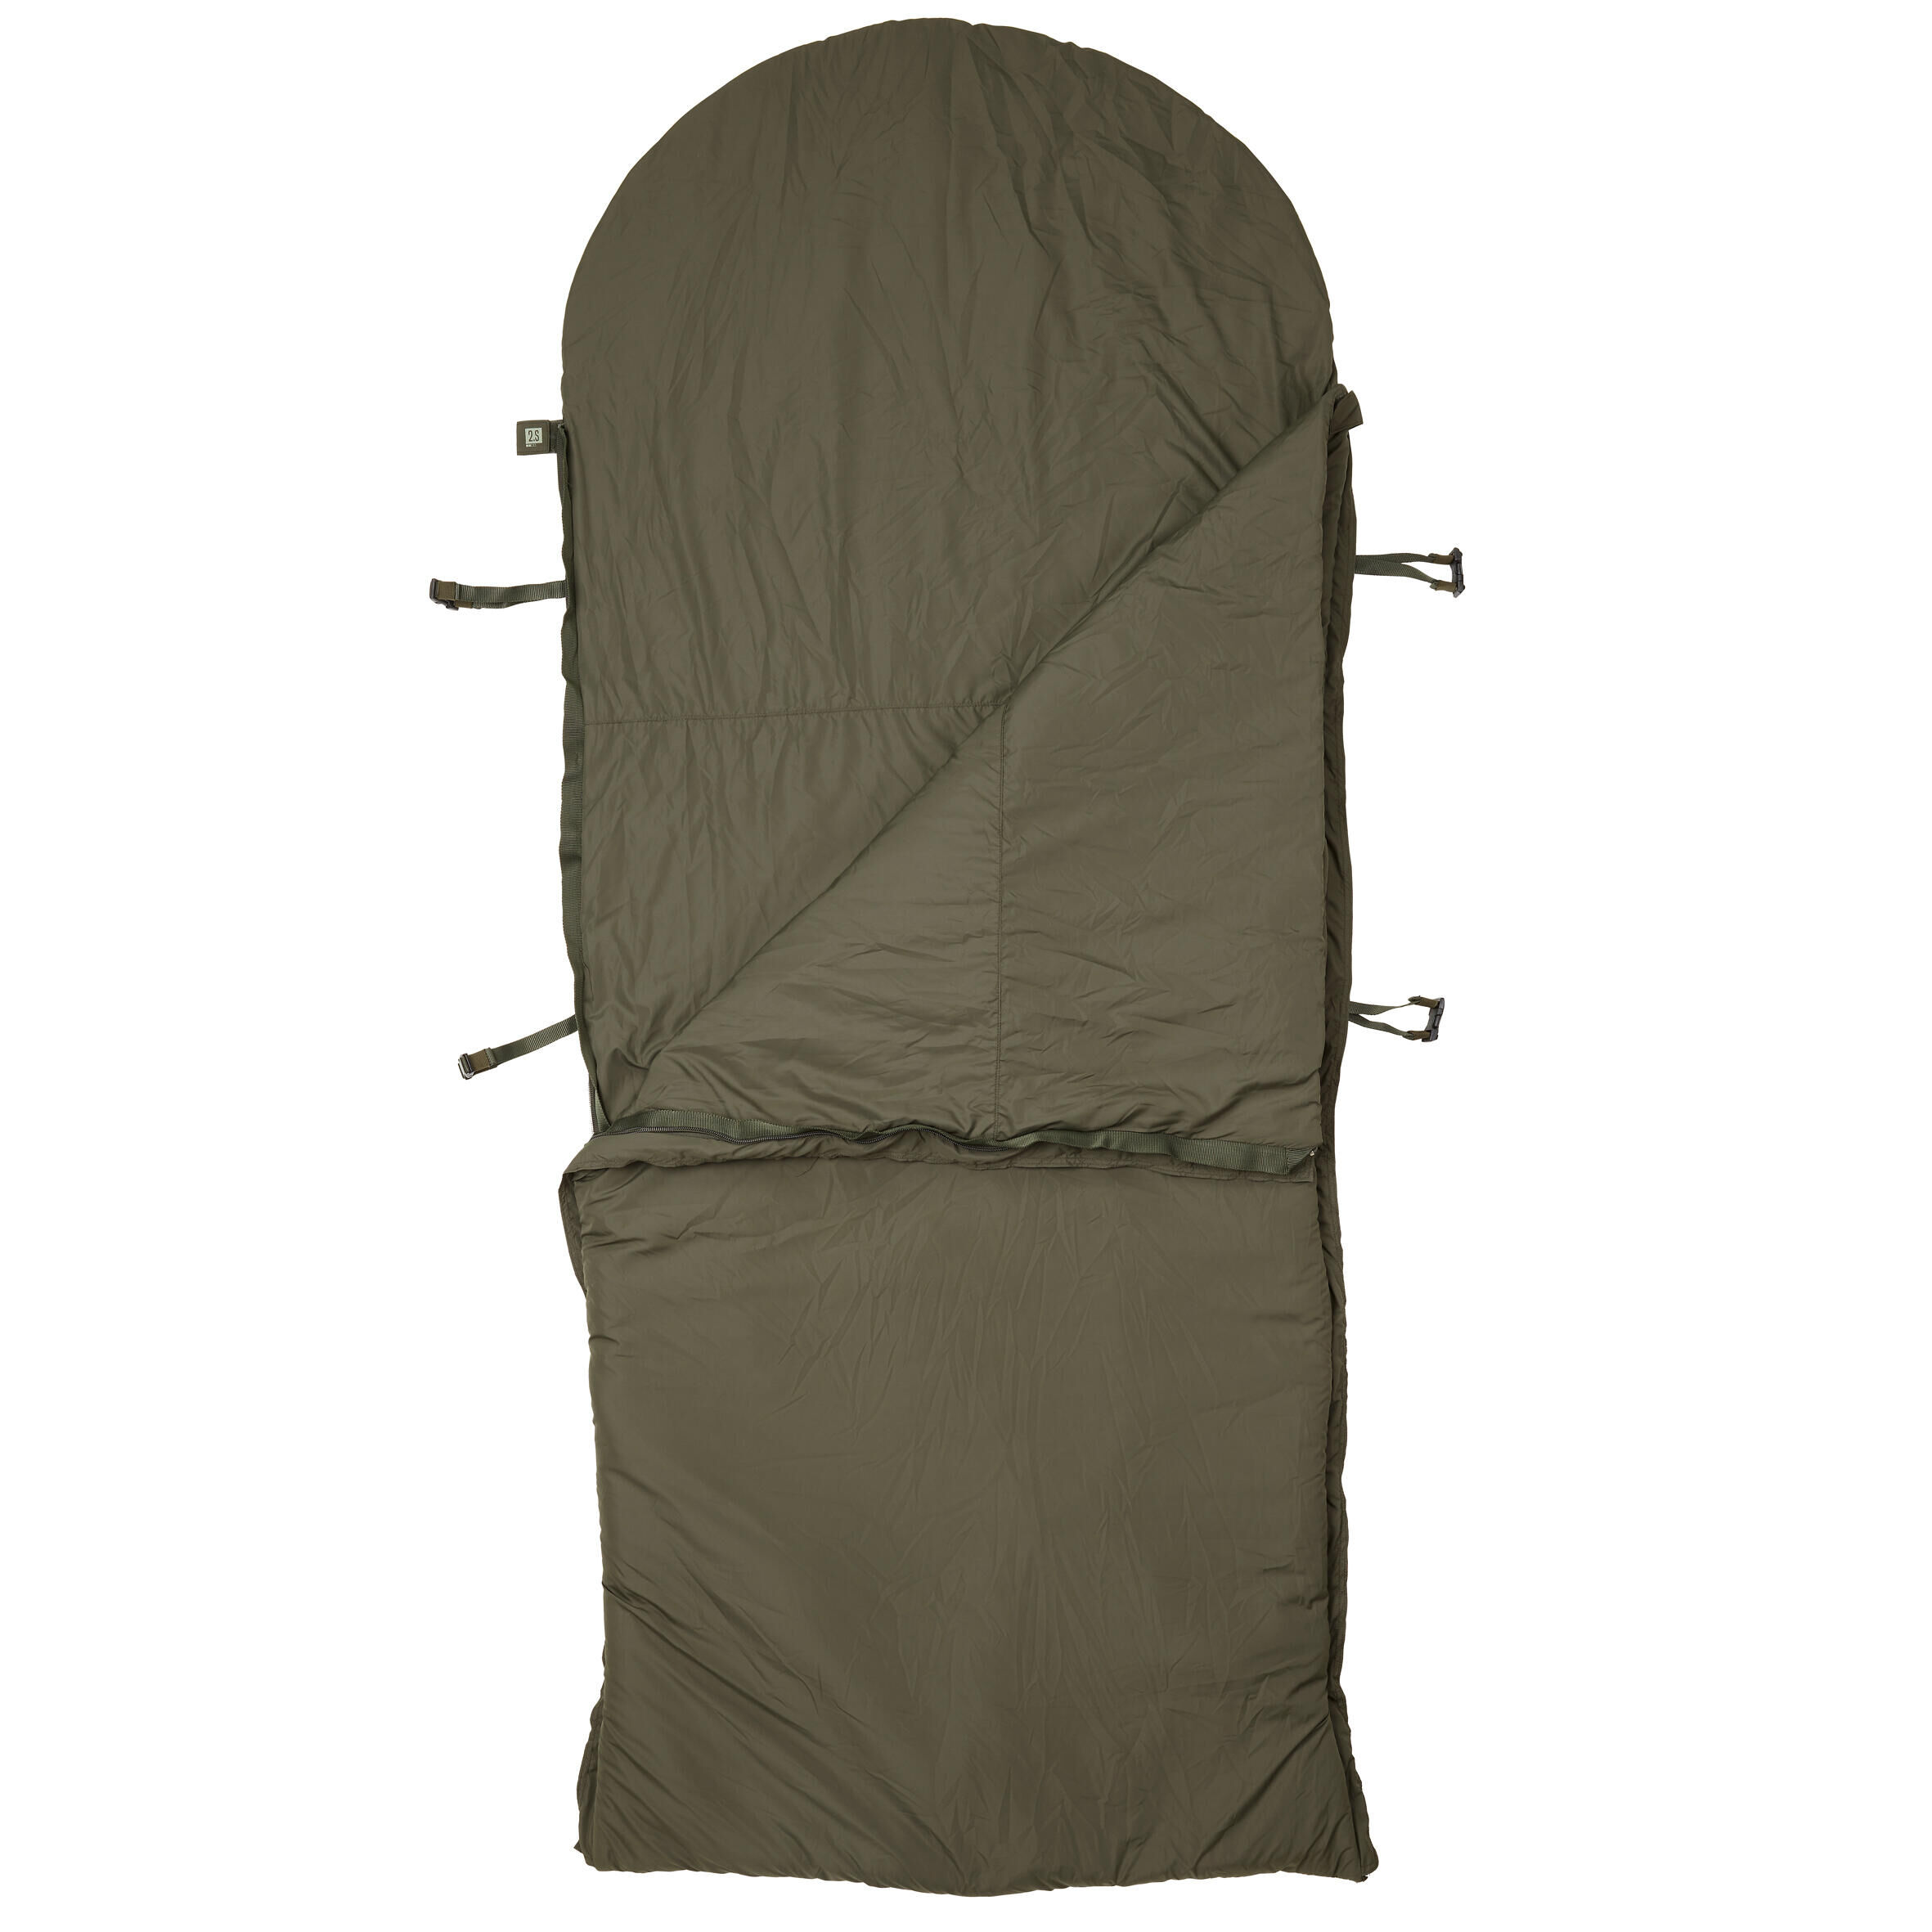 CAPERLAN 2-season sleeping bag for carp fishing